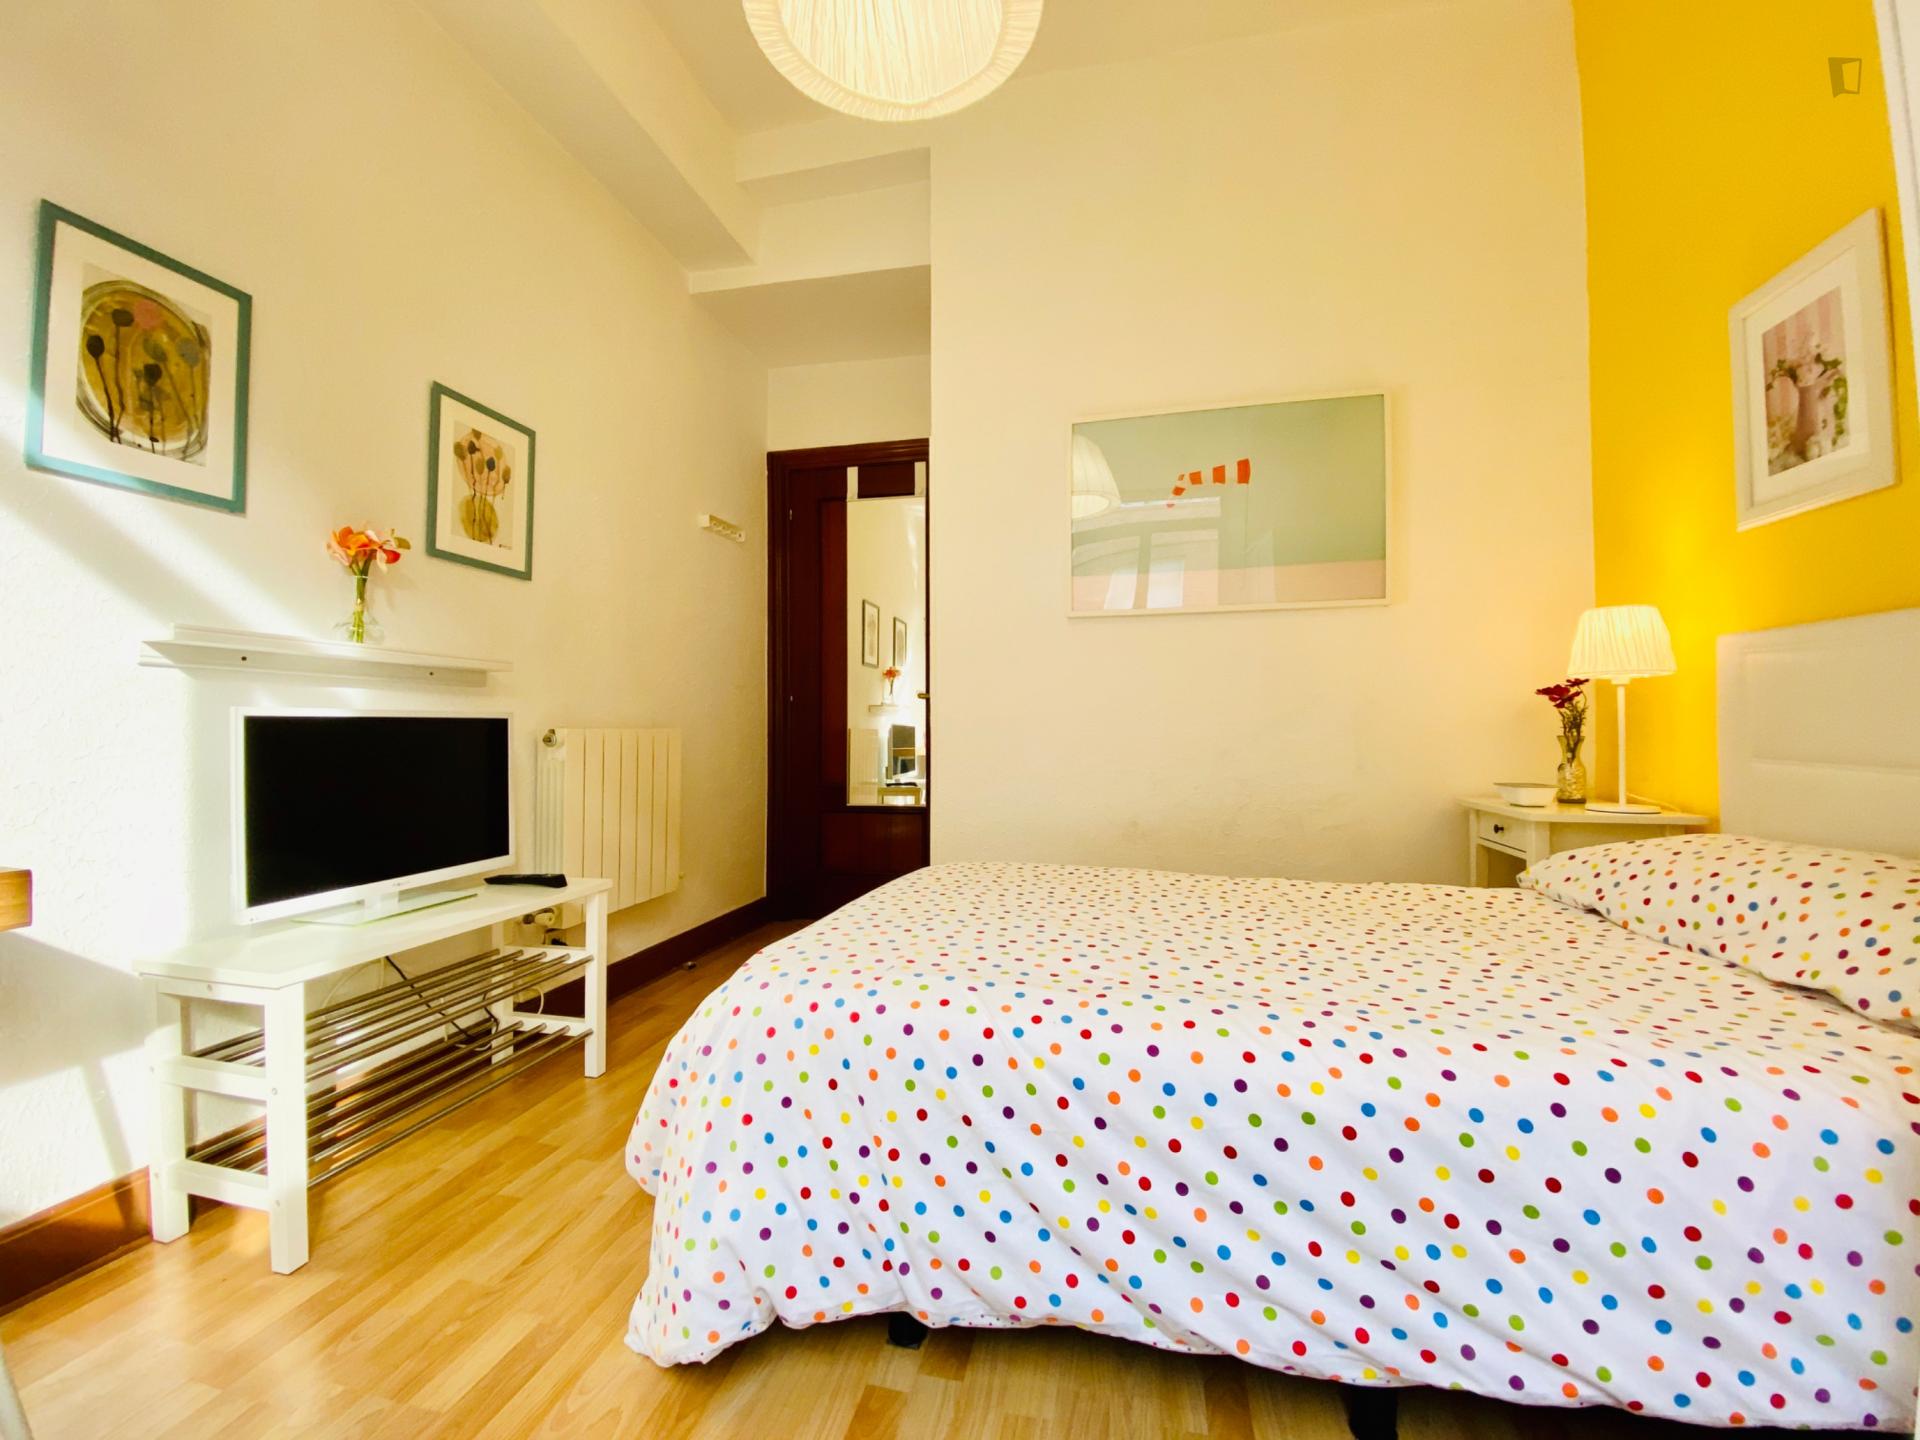 Huertas - Bedroom in a shared flat in Bilbao